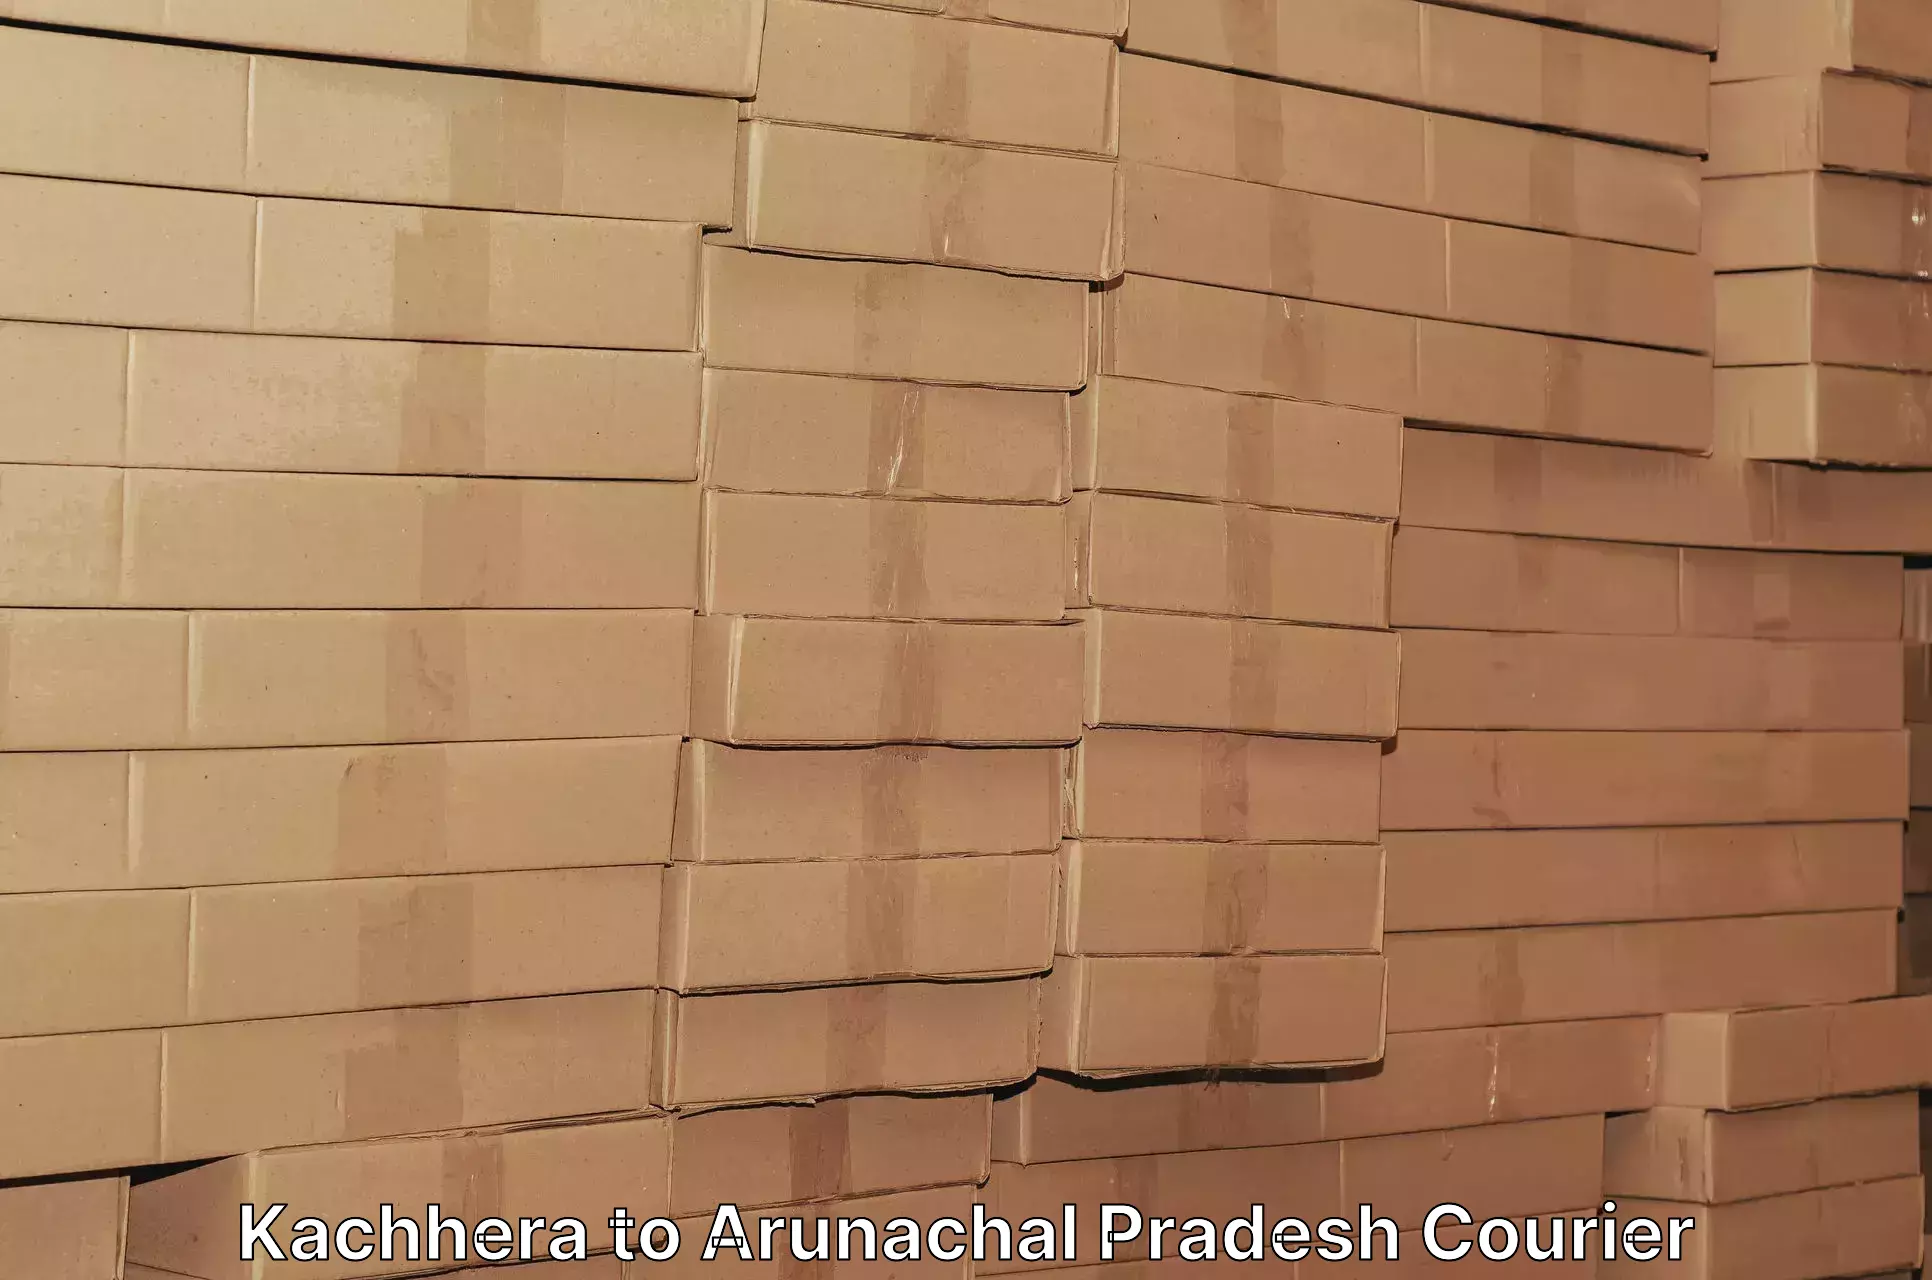 Professional courier handling Kachhera to Arunachal Pradesh